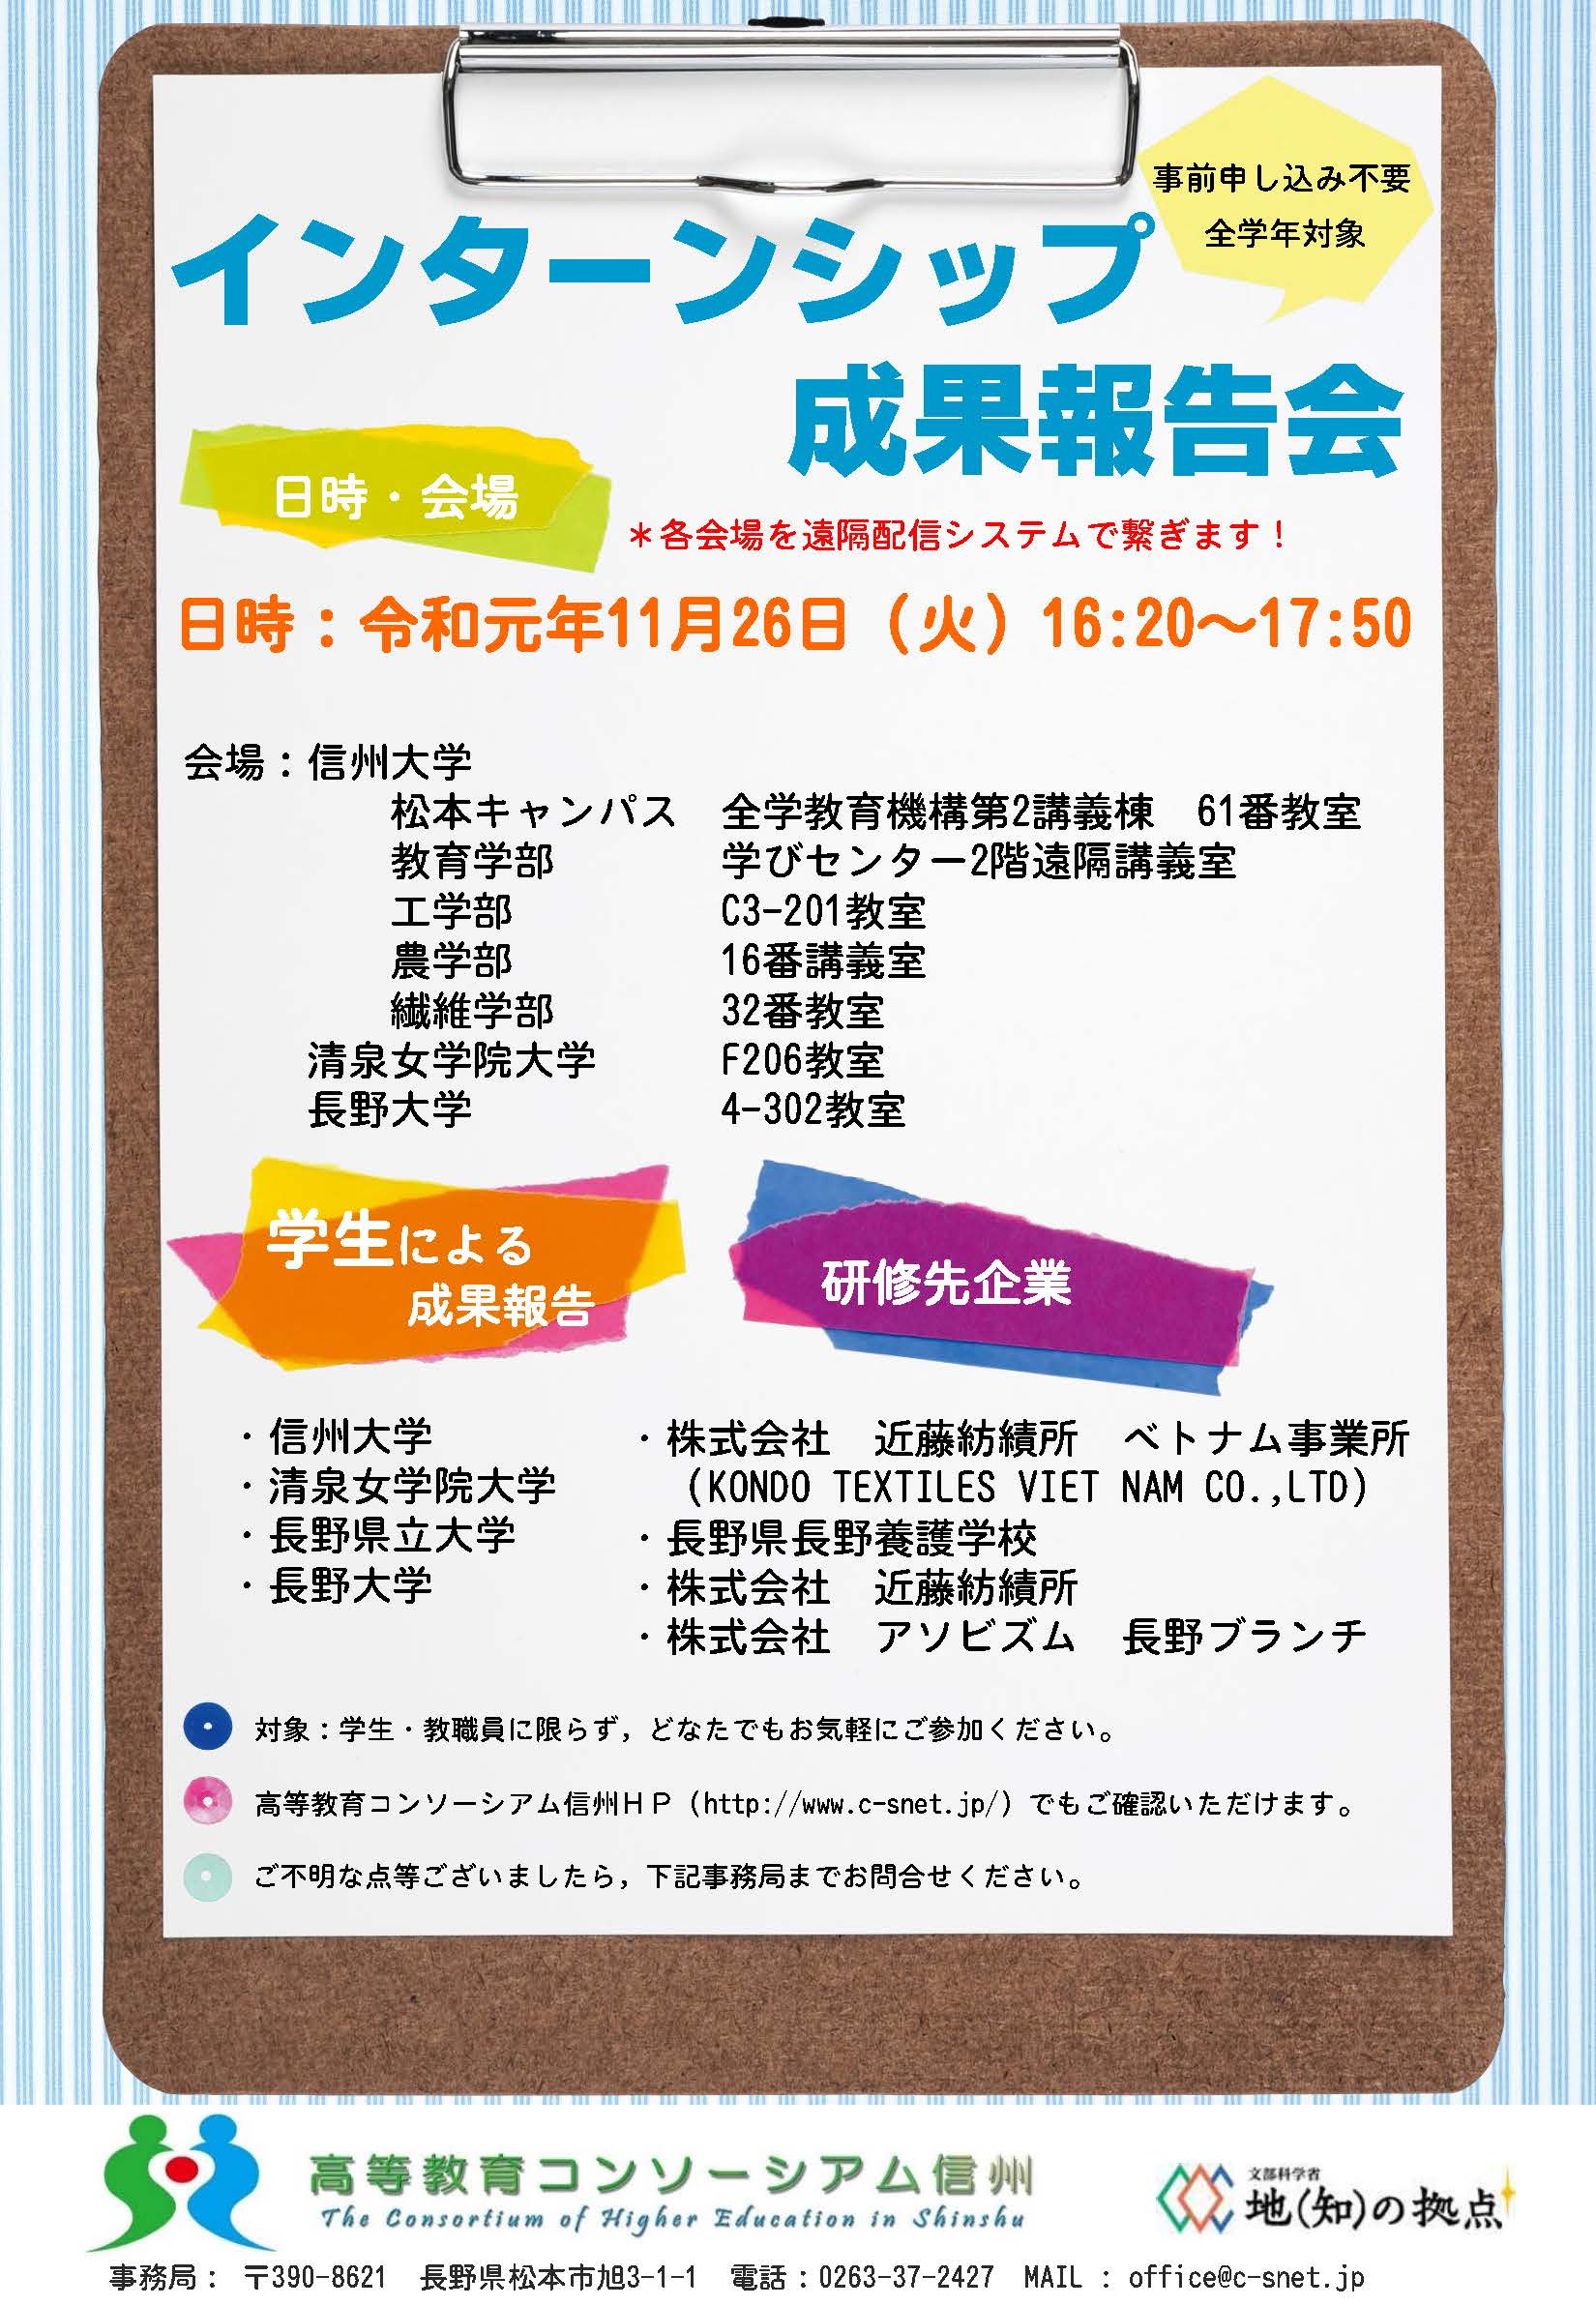 http://www.c-snet.jp/news/images/R1_internship_poster.jpg